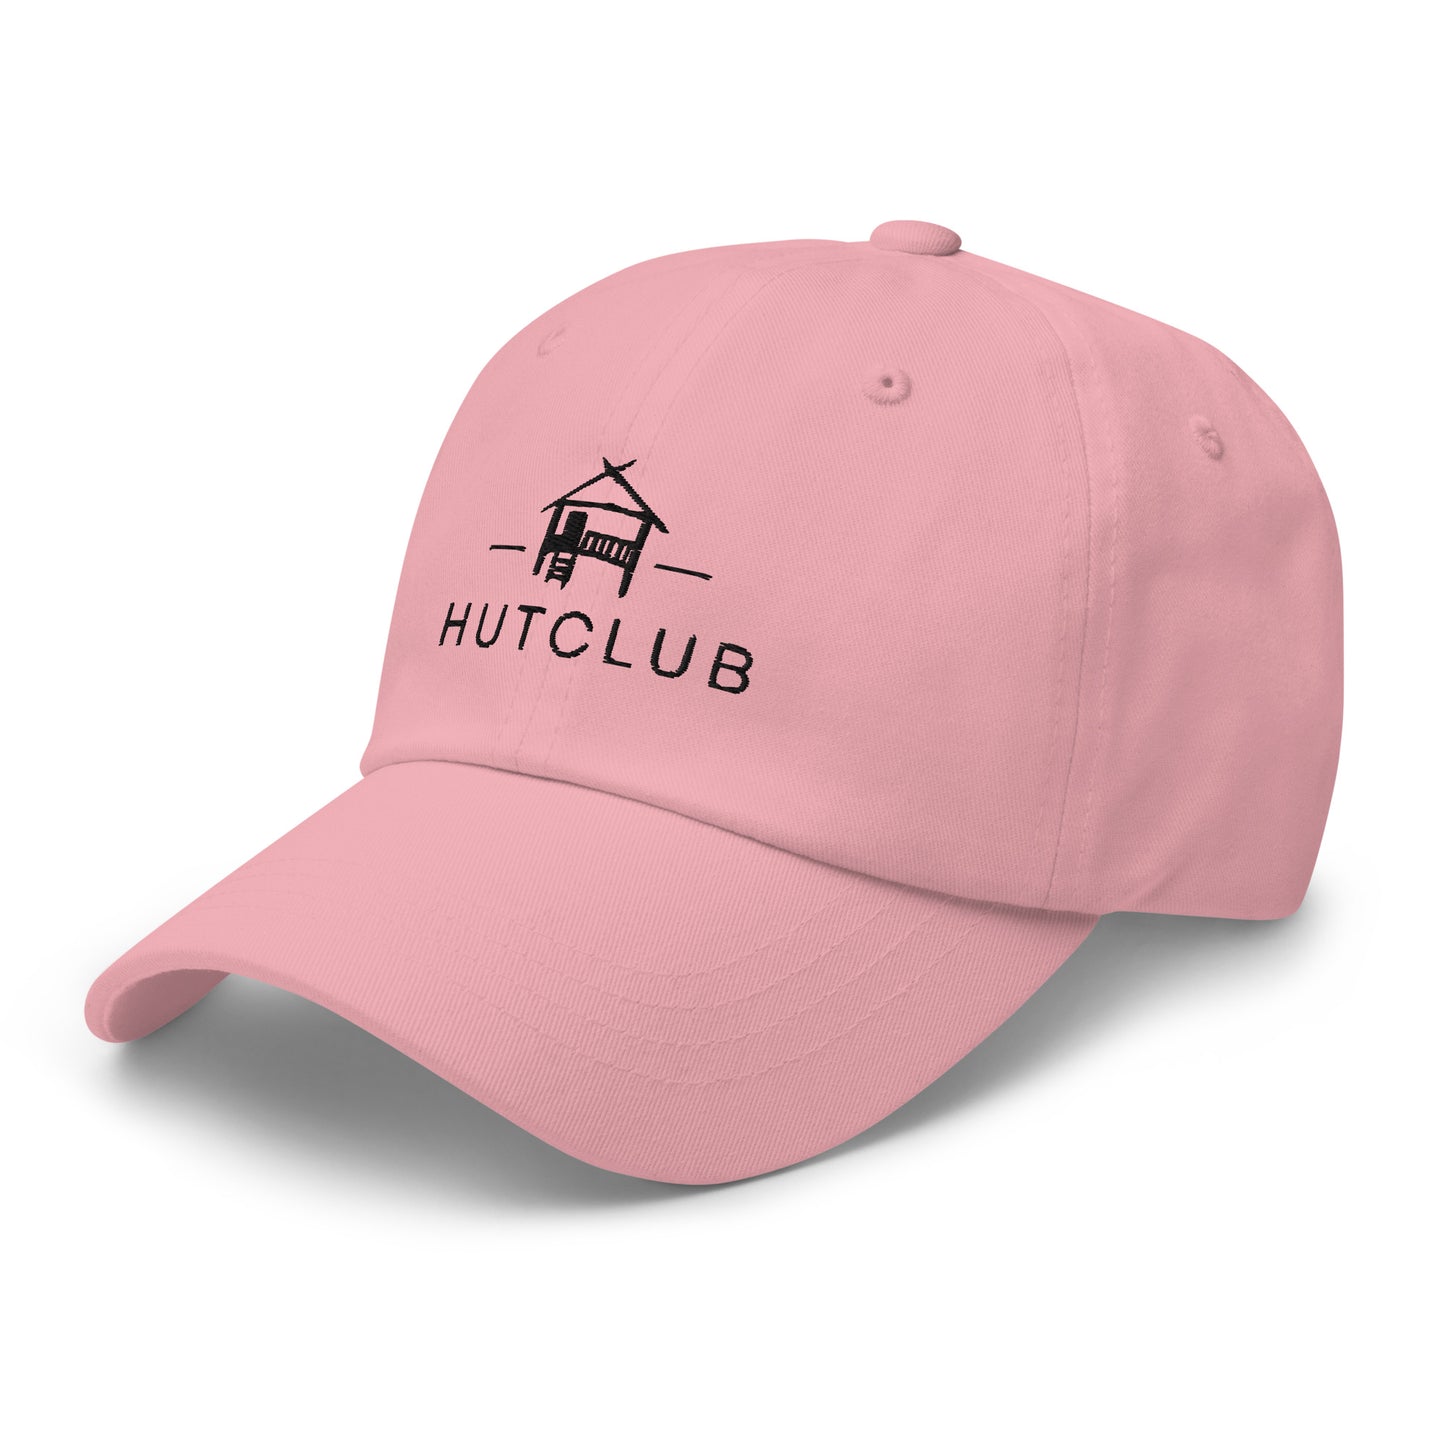 Hutclub Dad Hat